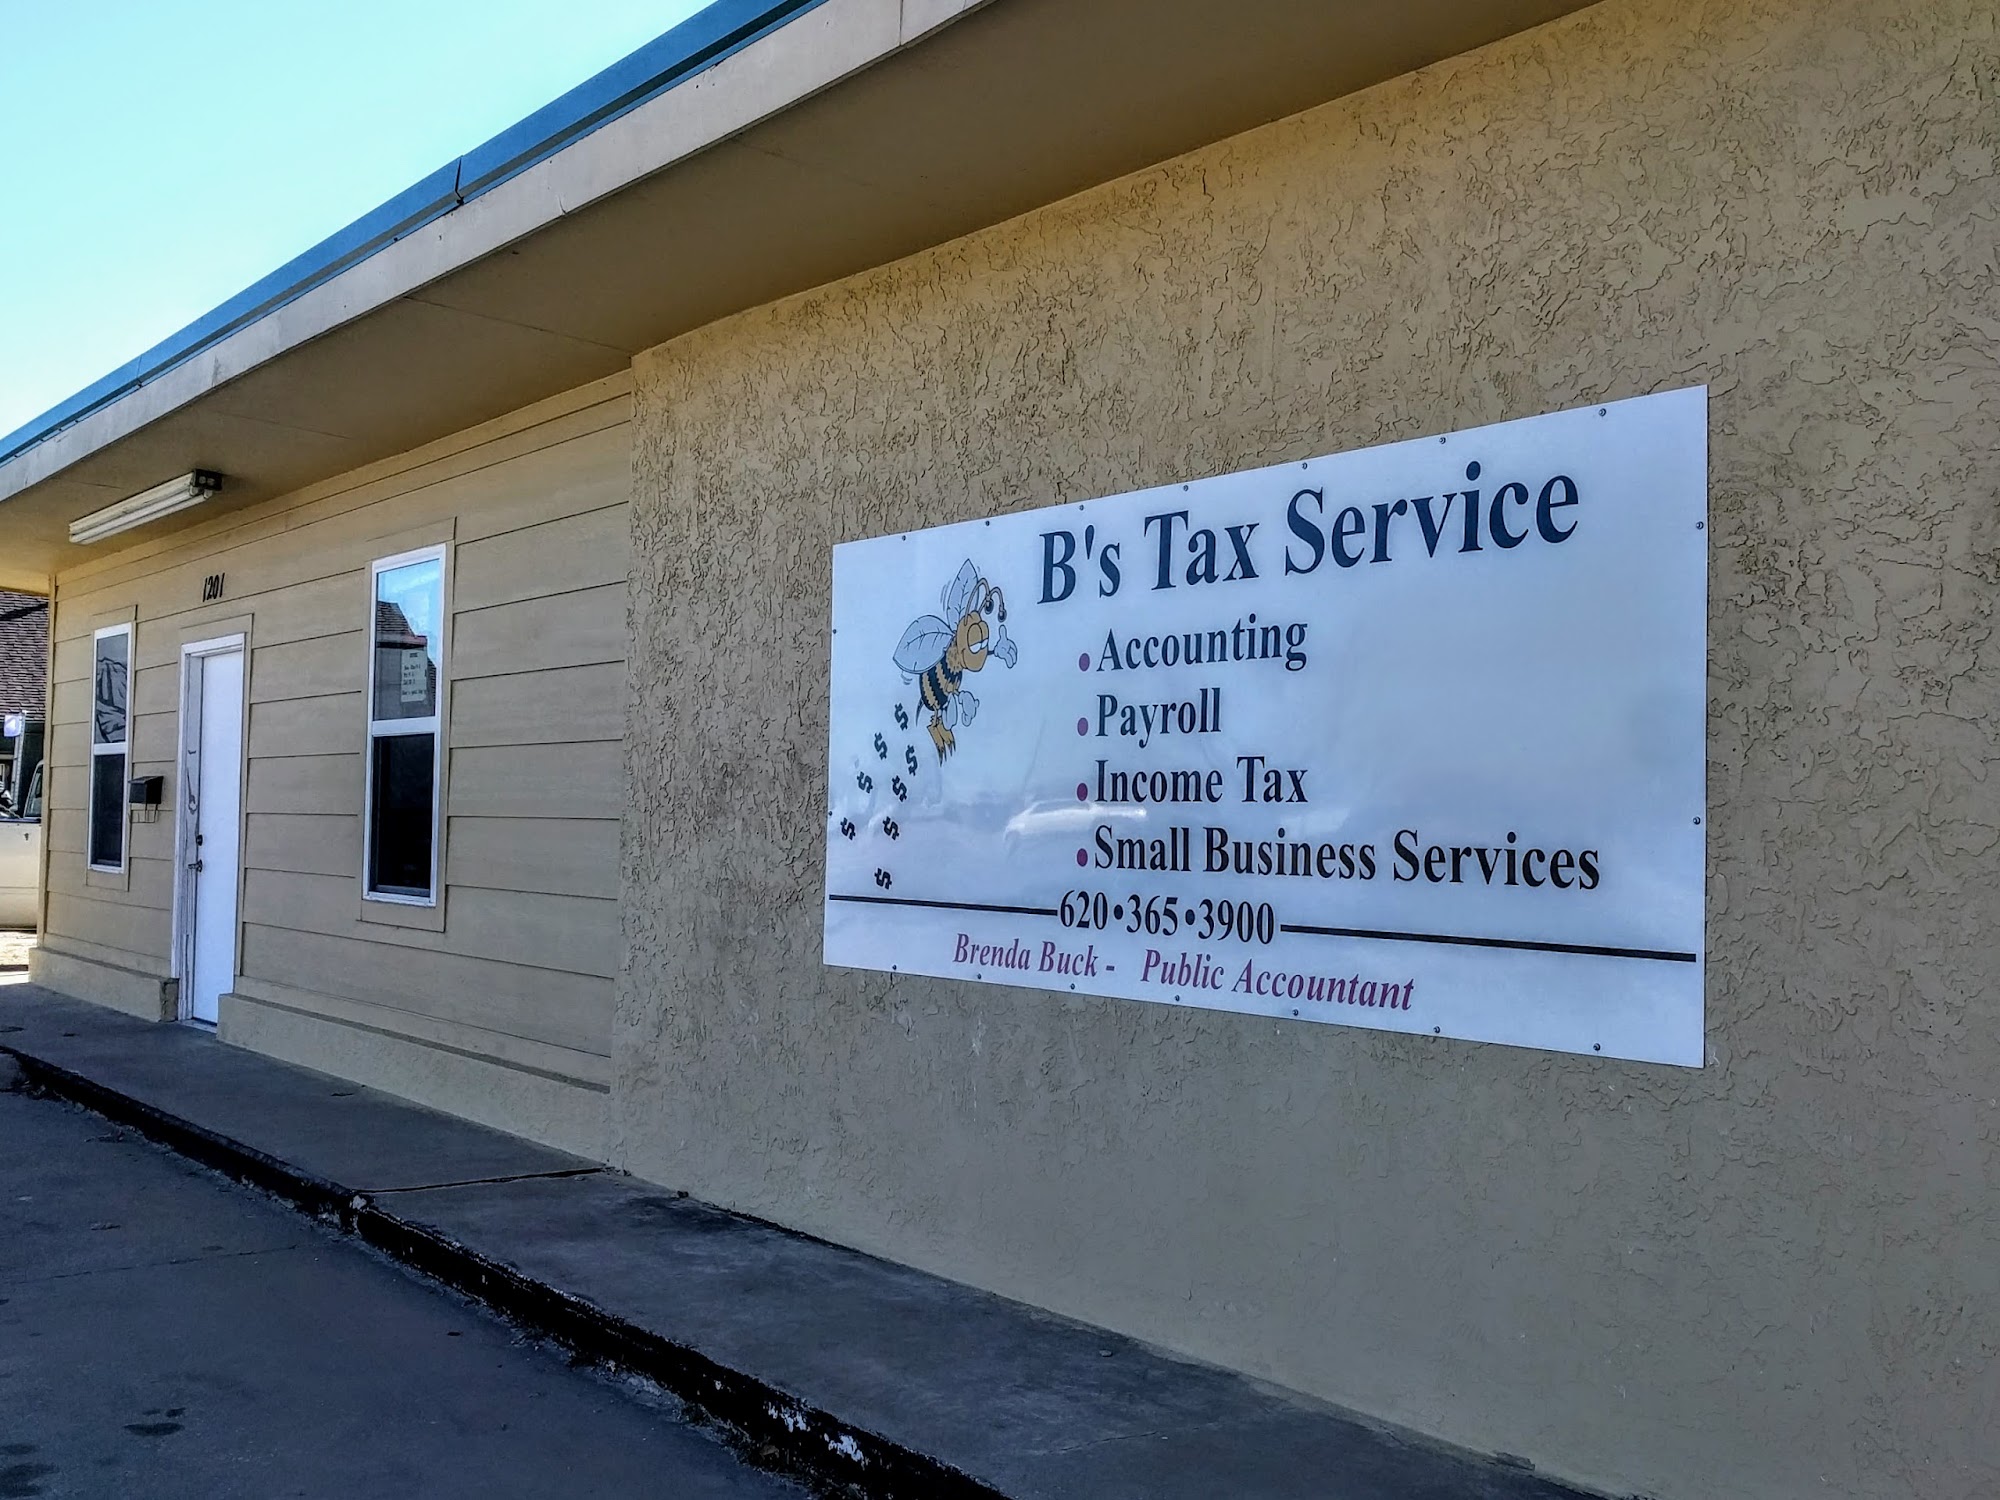 B's Tax Services LLC 1201 East St, Iola Kansas 66749